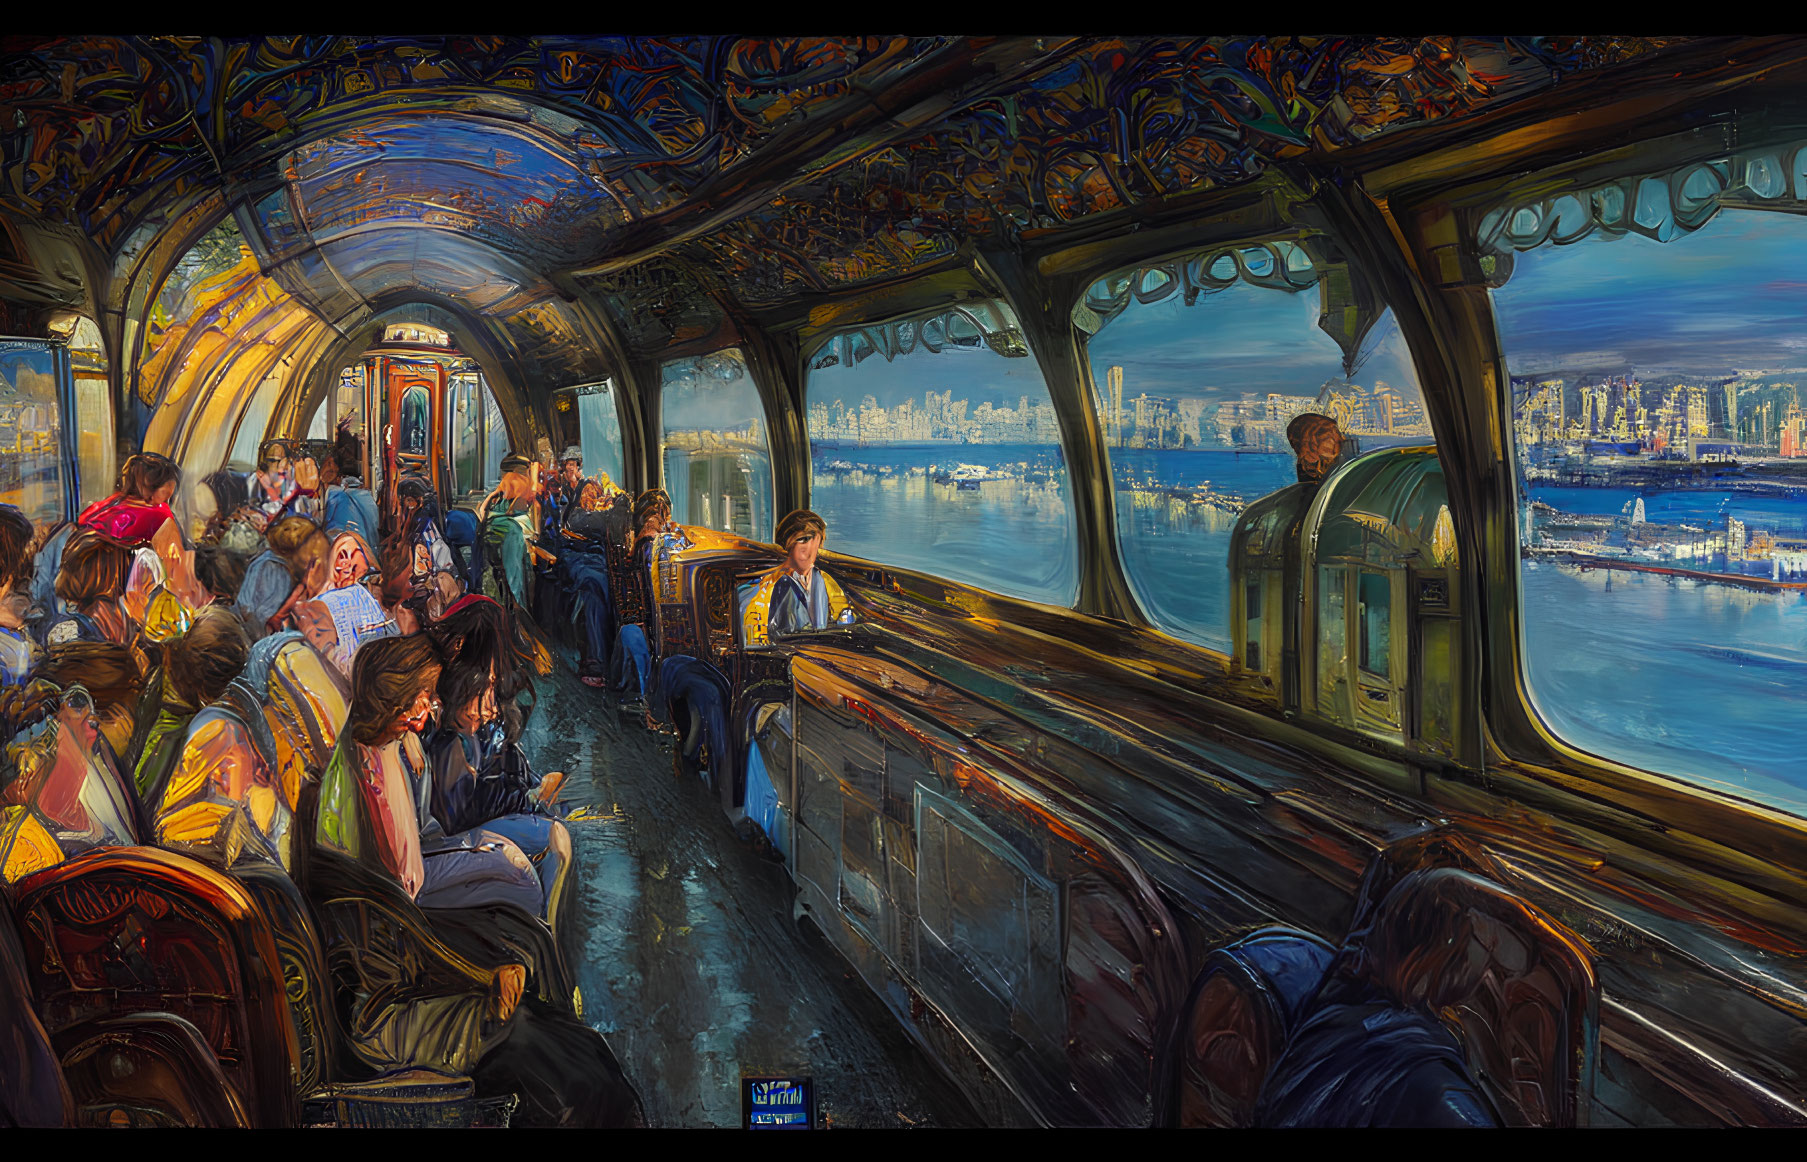 Colorful illustration of passengers in futuristic train with ornate designs, cityscape view.